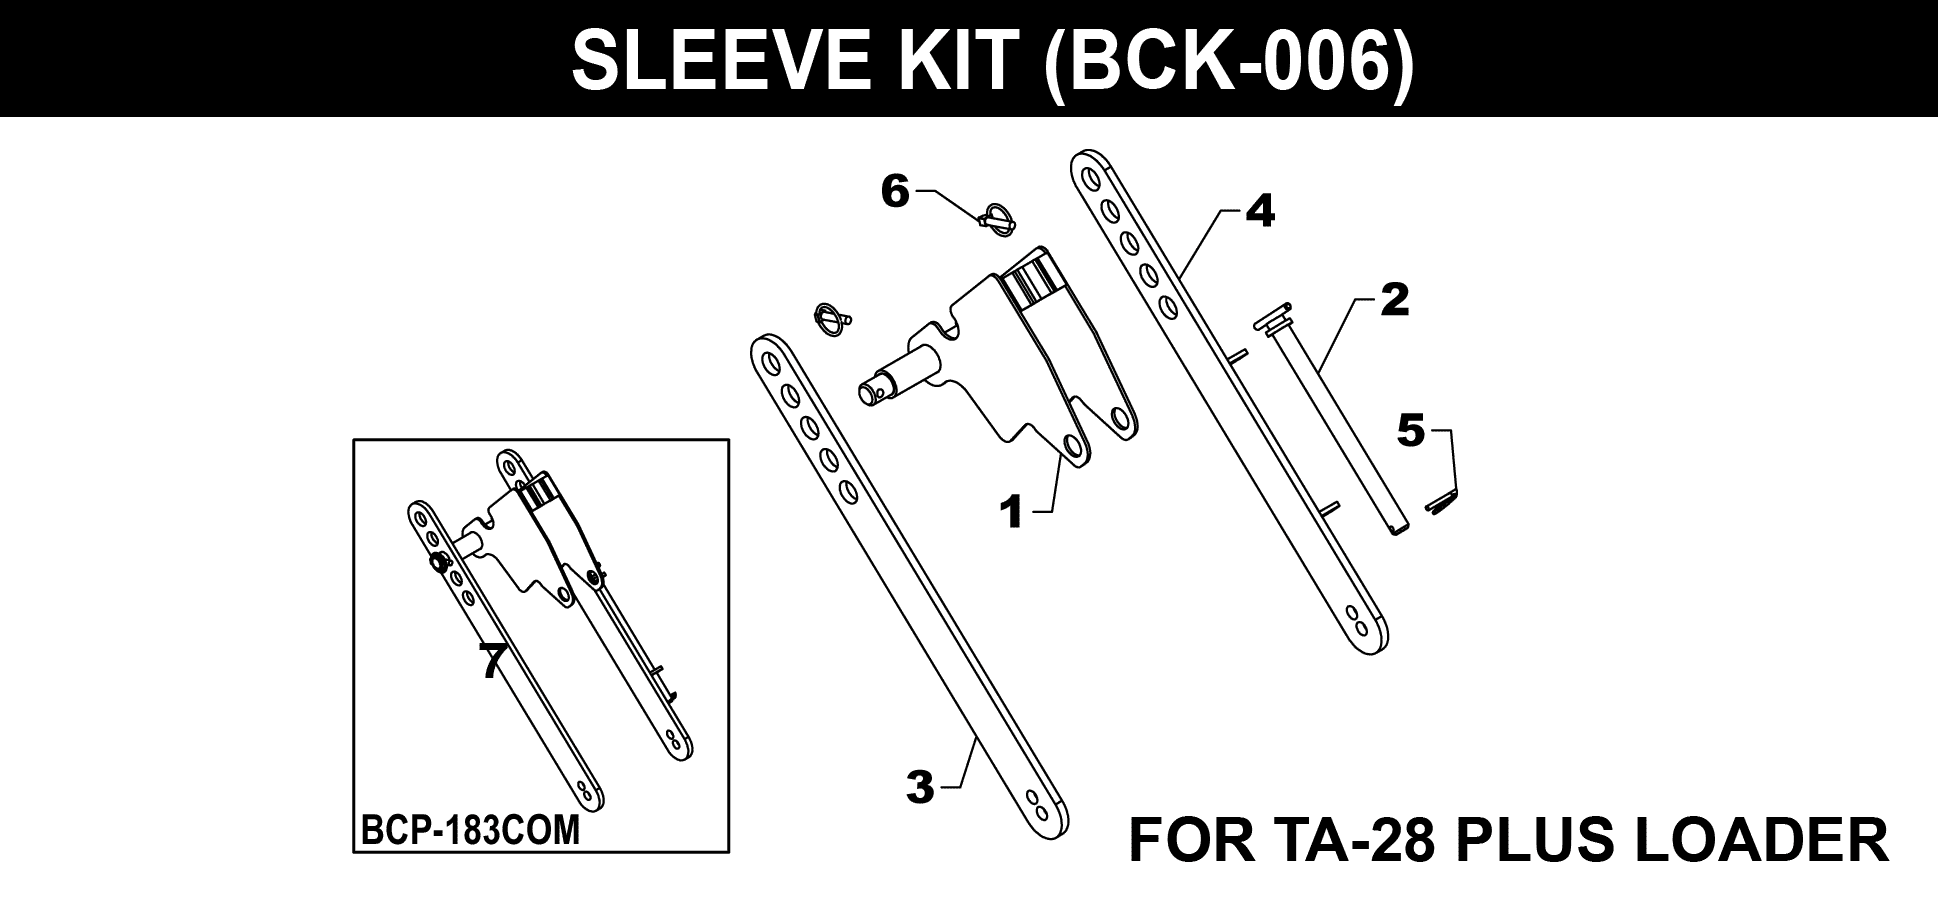 BCK-006 Sleeve Kit